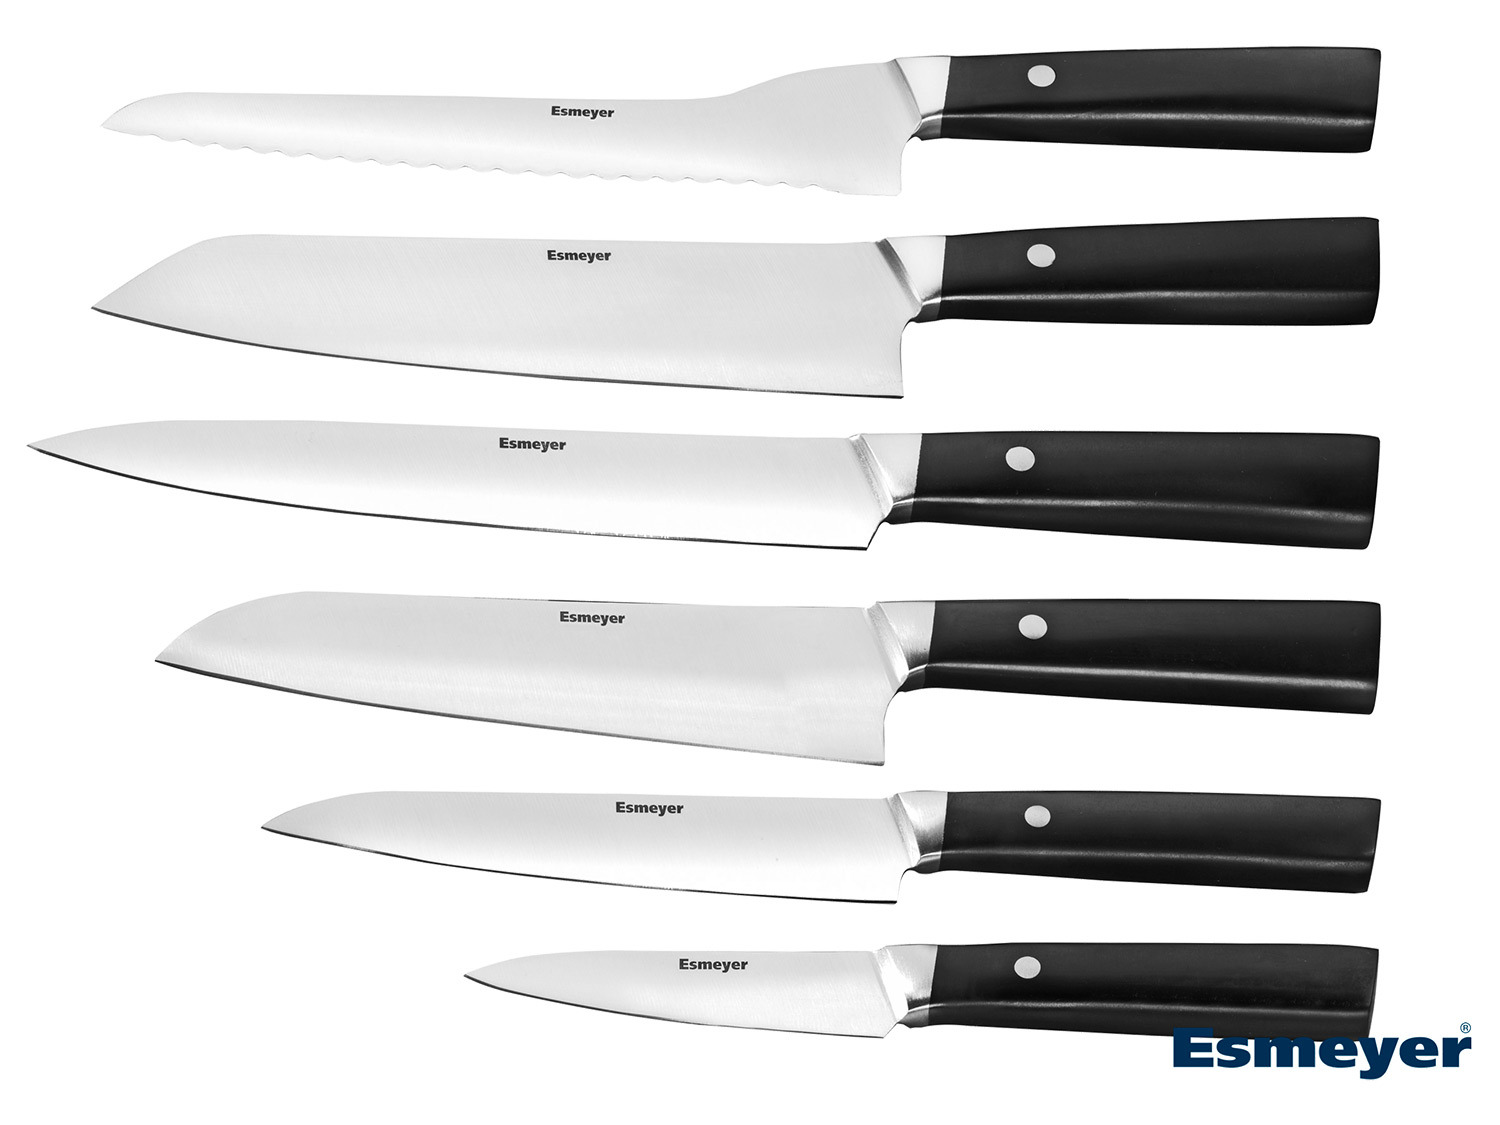 Esmeyer Asia Messerset 6-teilig aus Edelstahl | LIDL